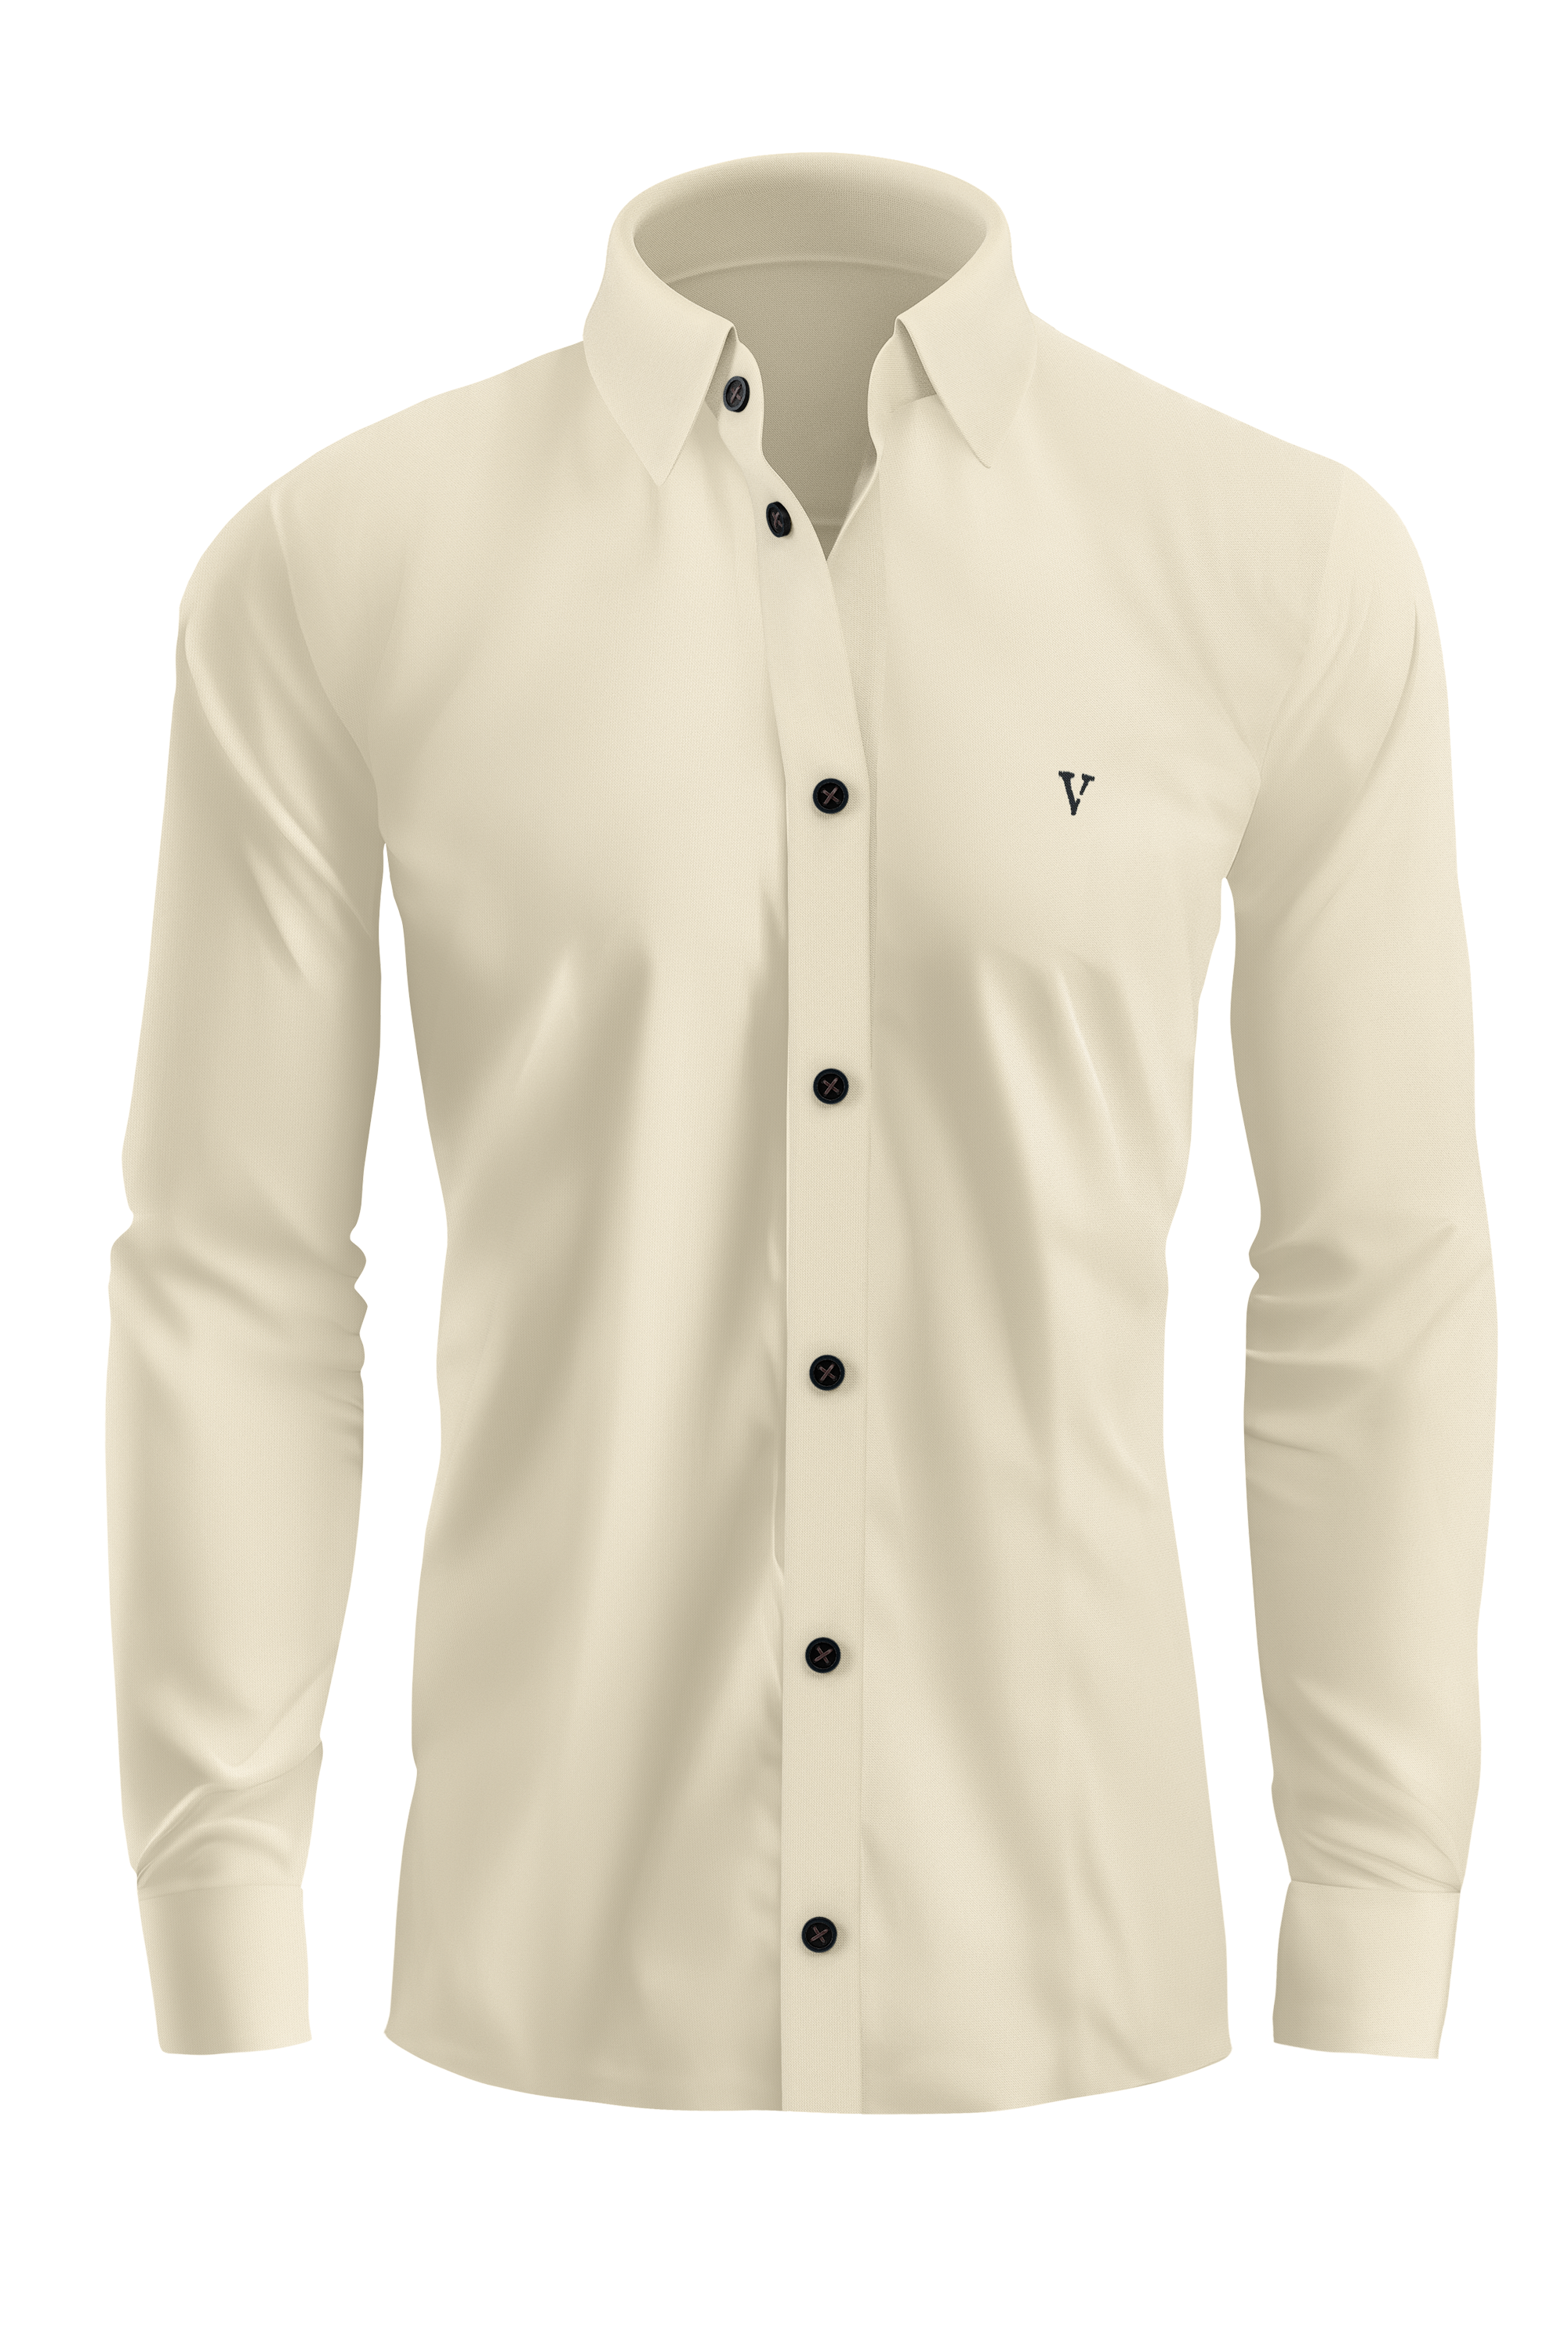 Vercini Versatile Collection: Classic Shirt with Signature 'V' Emblem